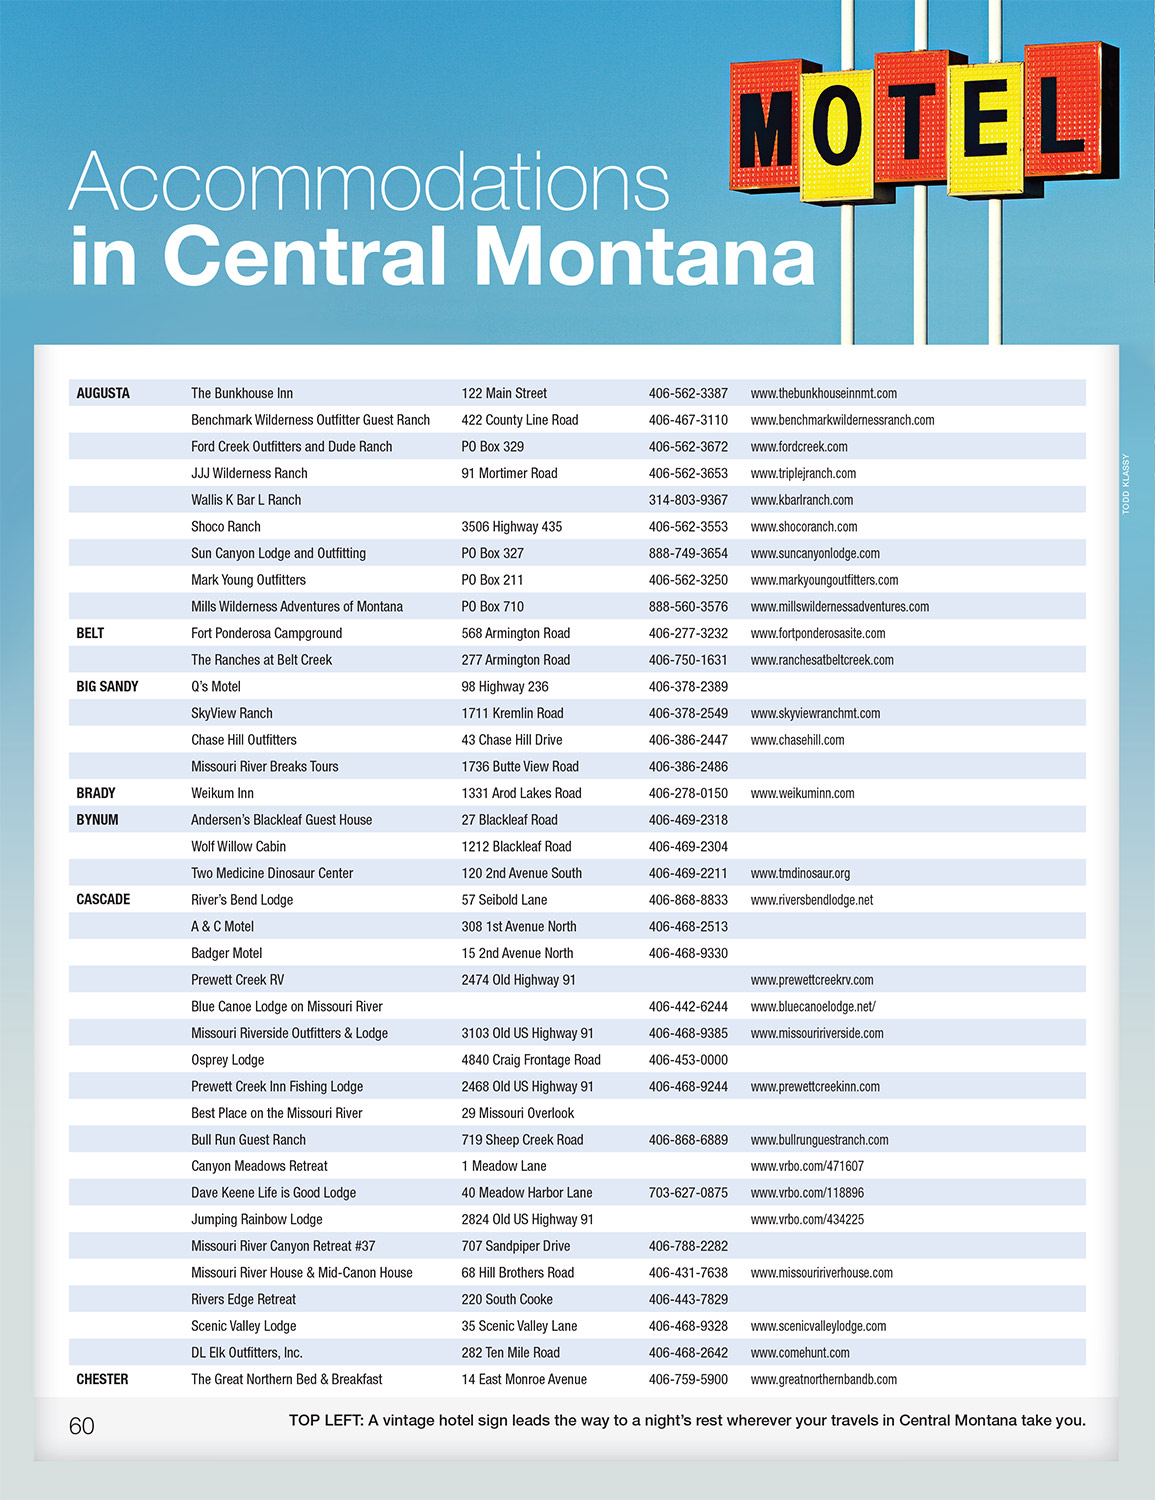 Central-Montana-Travel-Photography-06.jpg